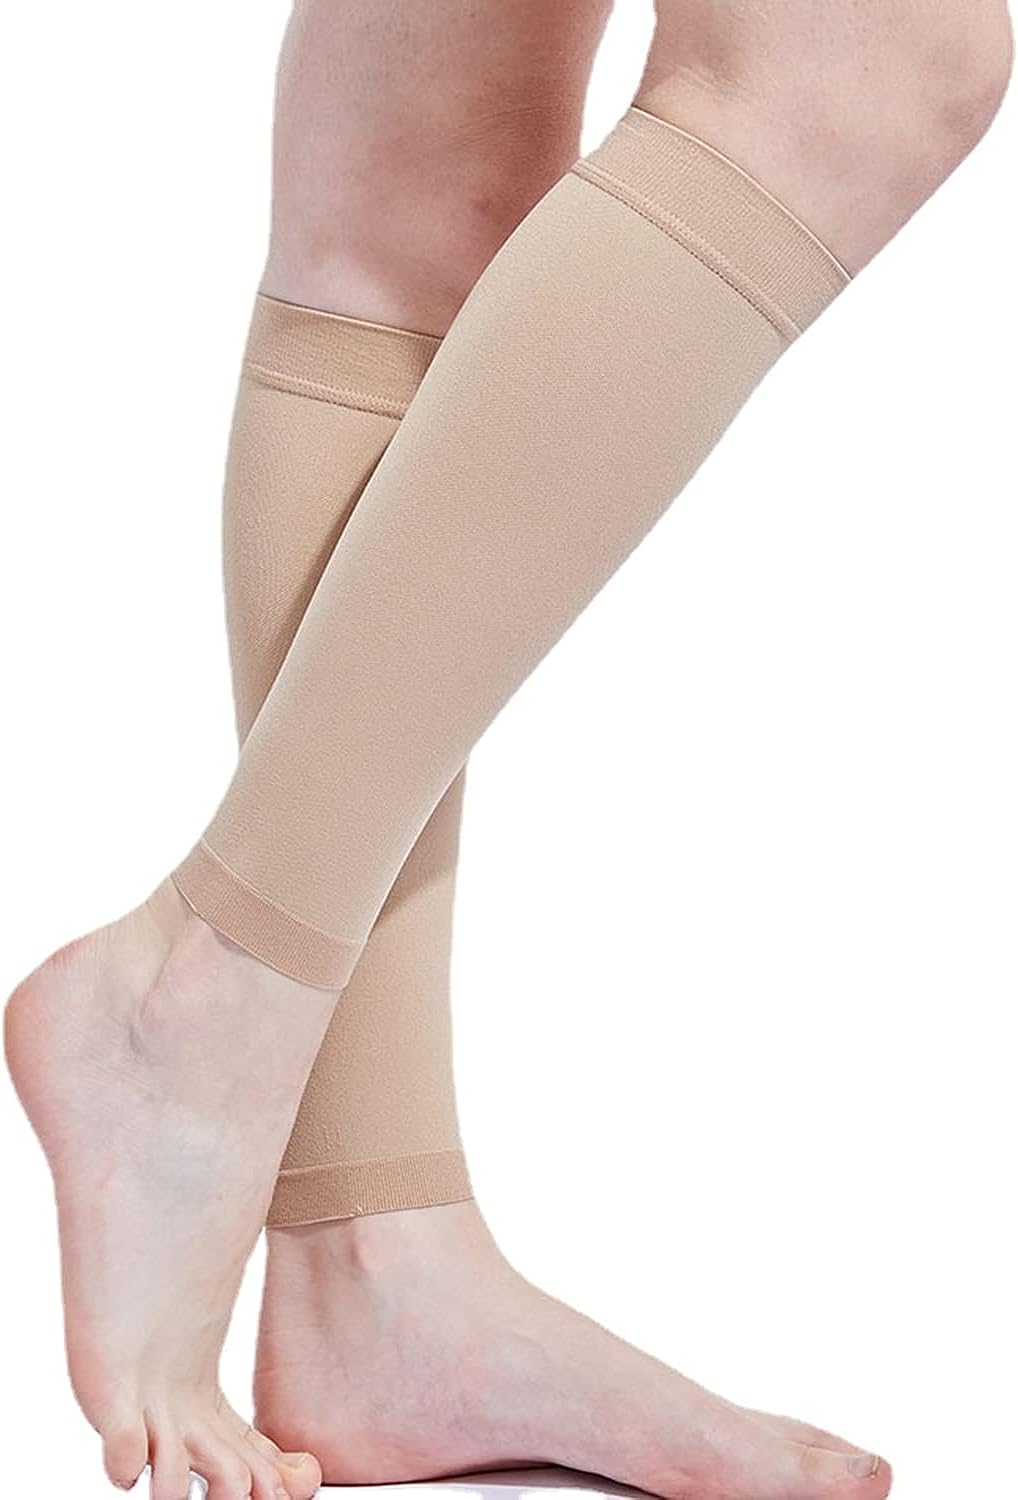 Kingbridal Women's Medical Compression Stockings 15-20mmhg Socks Calf Sleeve